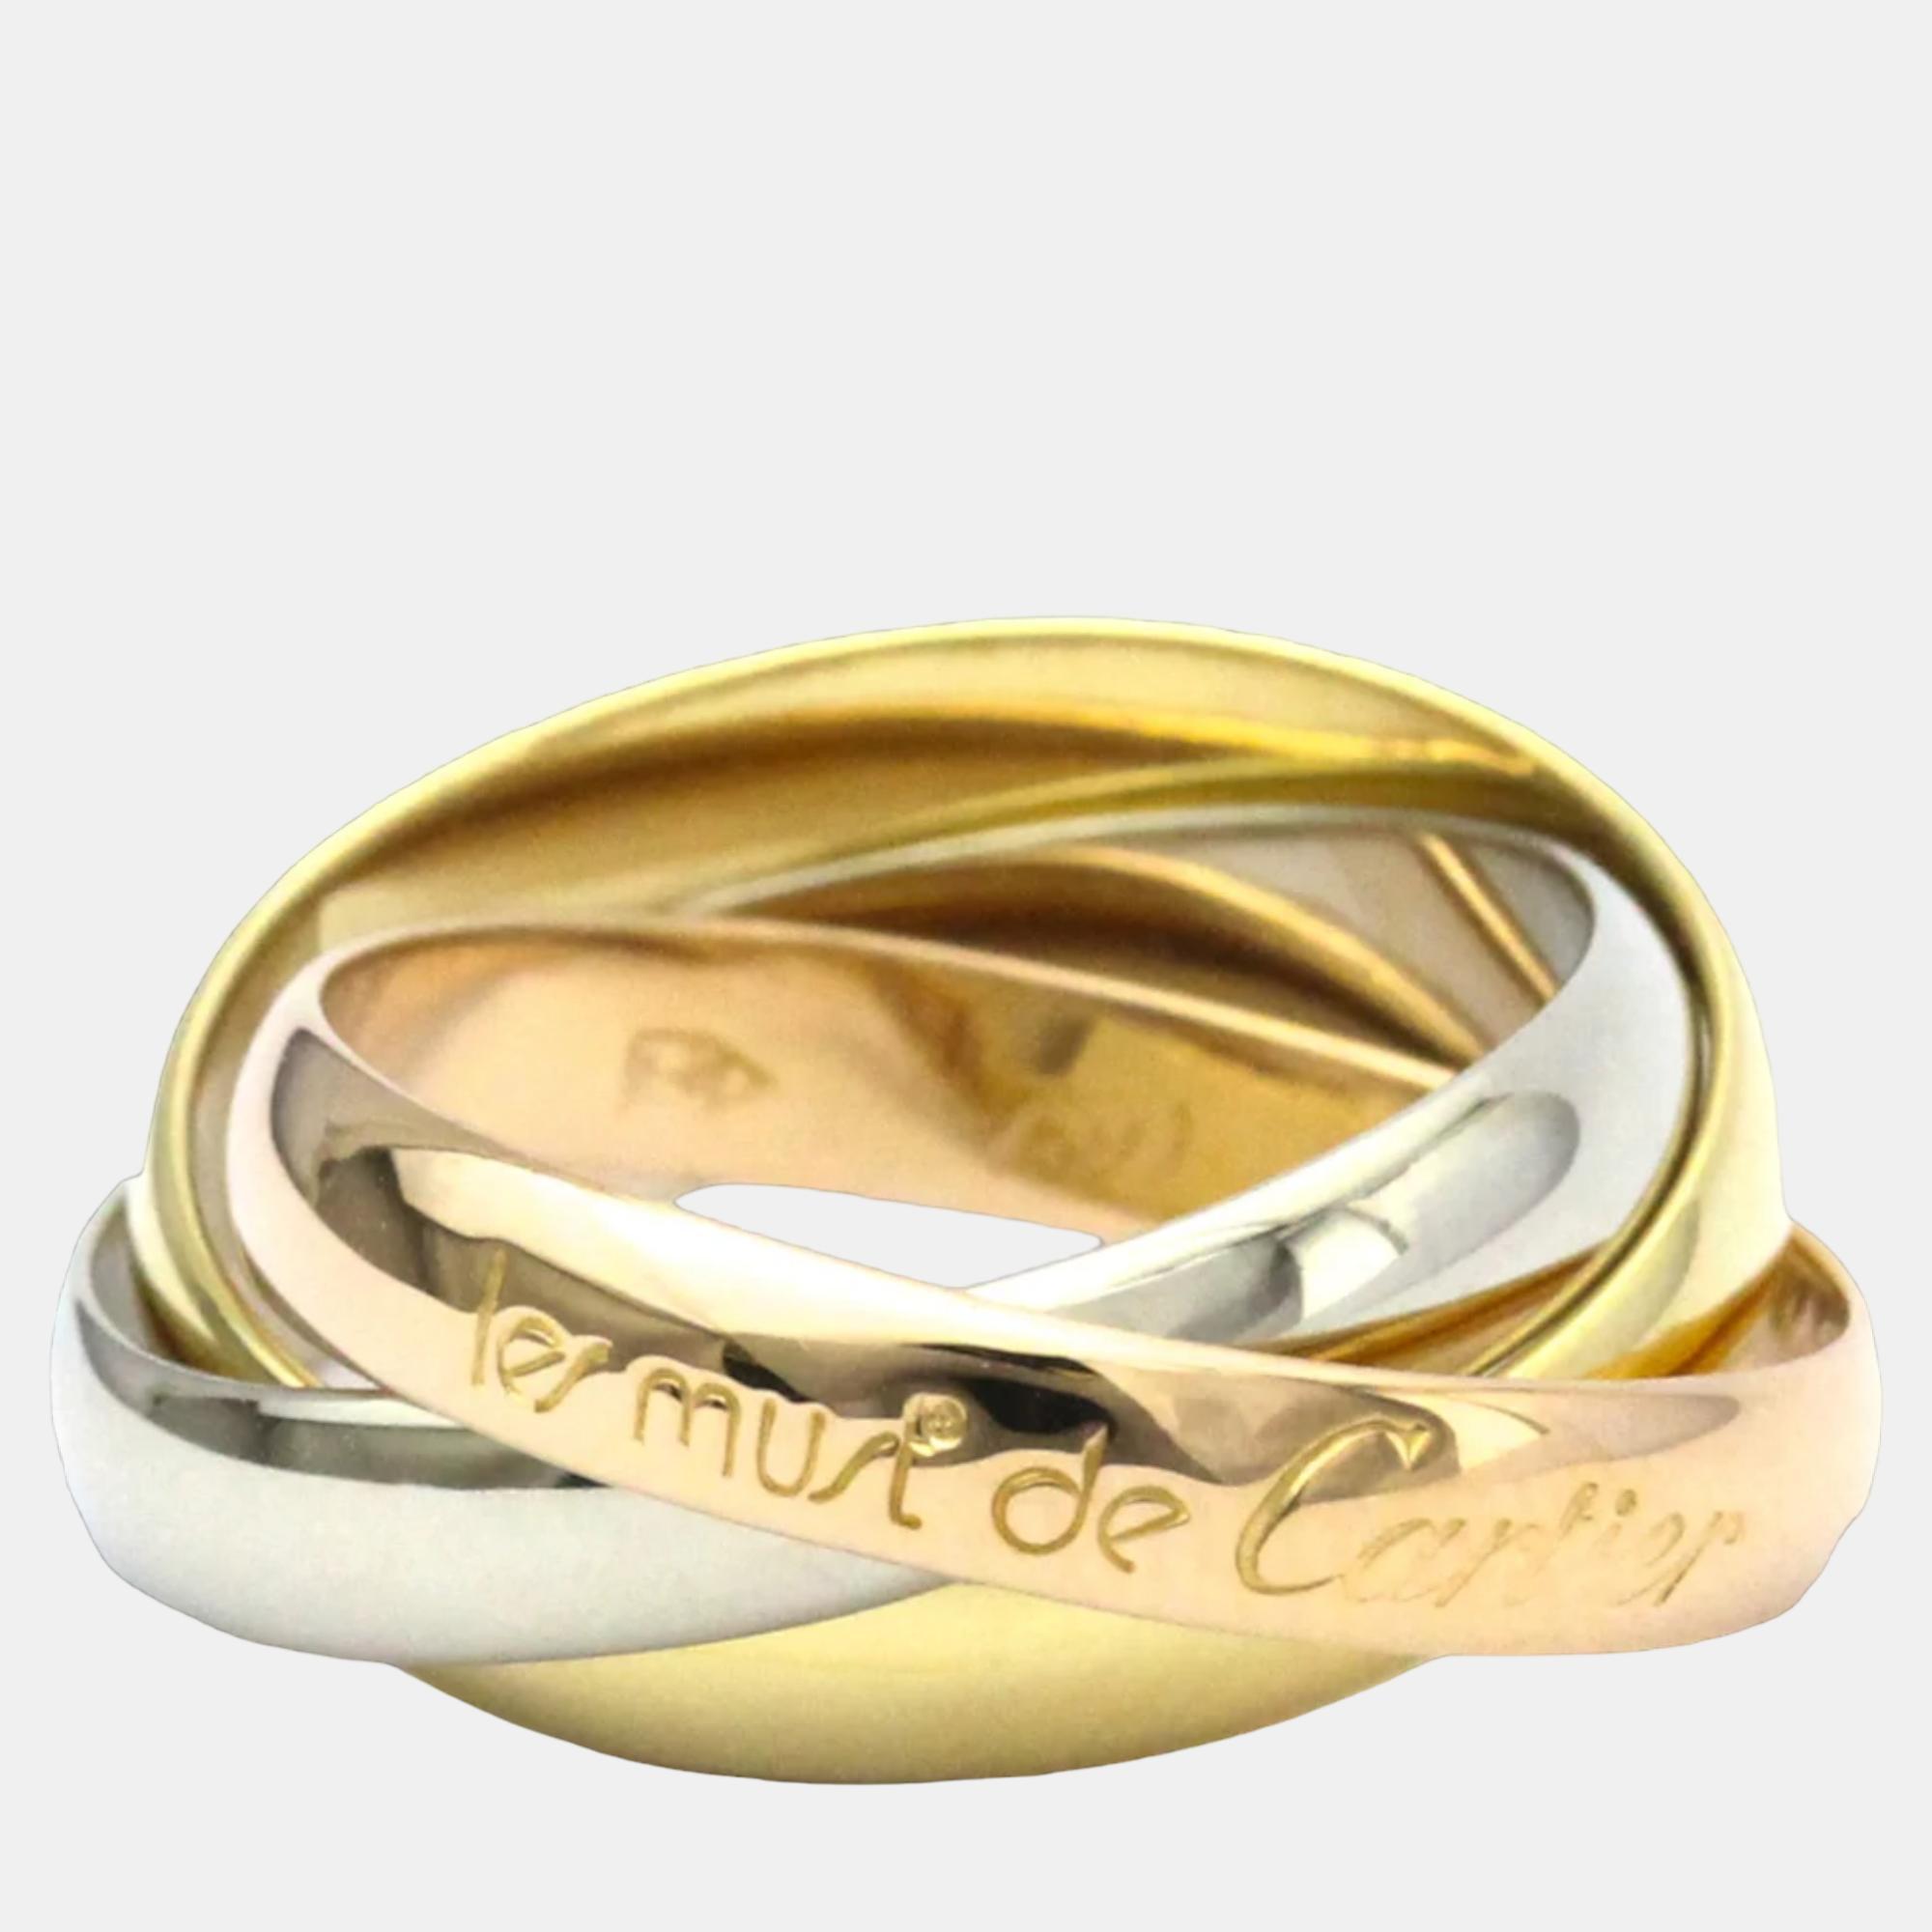 Cartier Les Must De Cartier 18K Yellow Rose And White Gold Ring EU 50